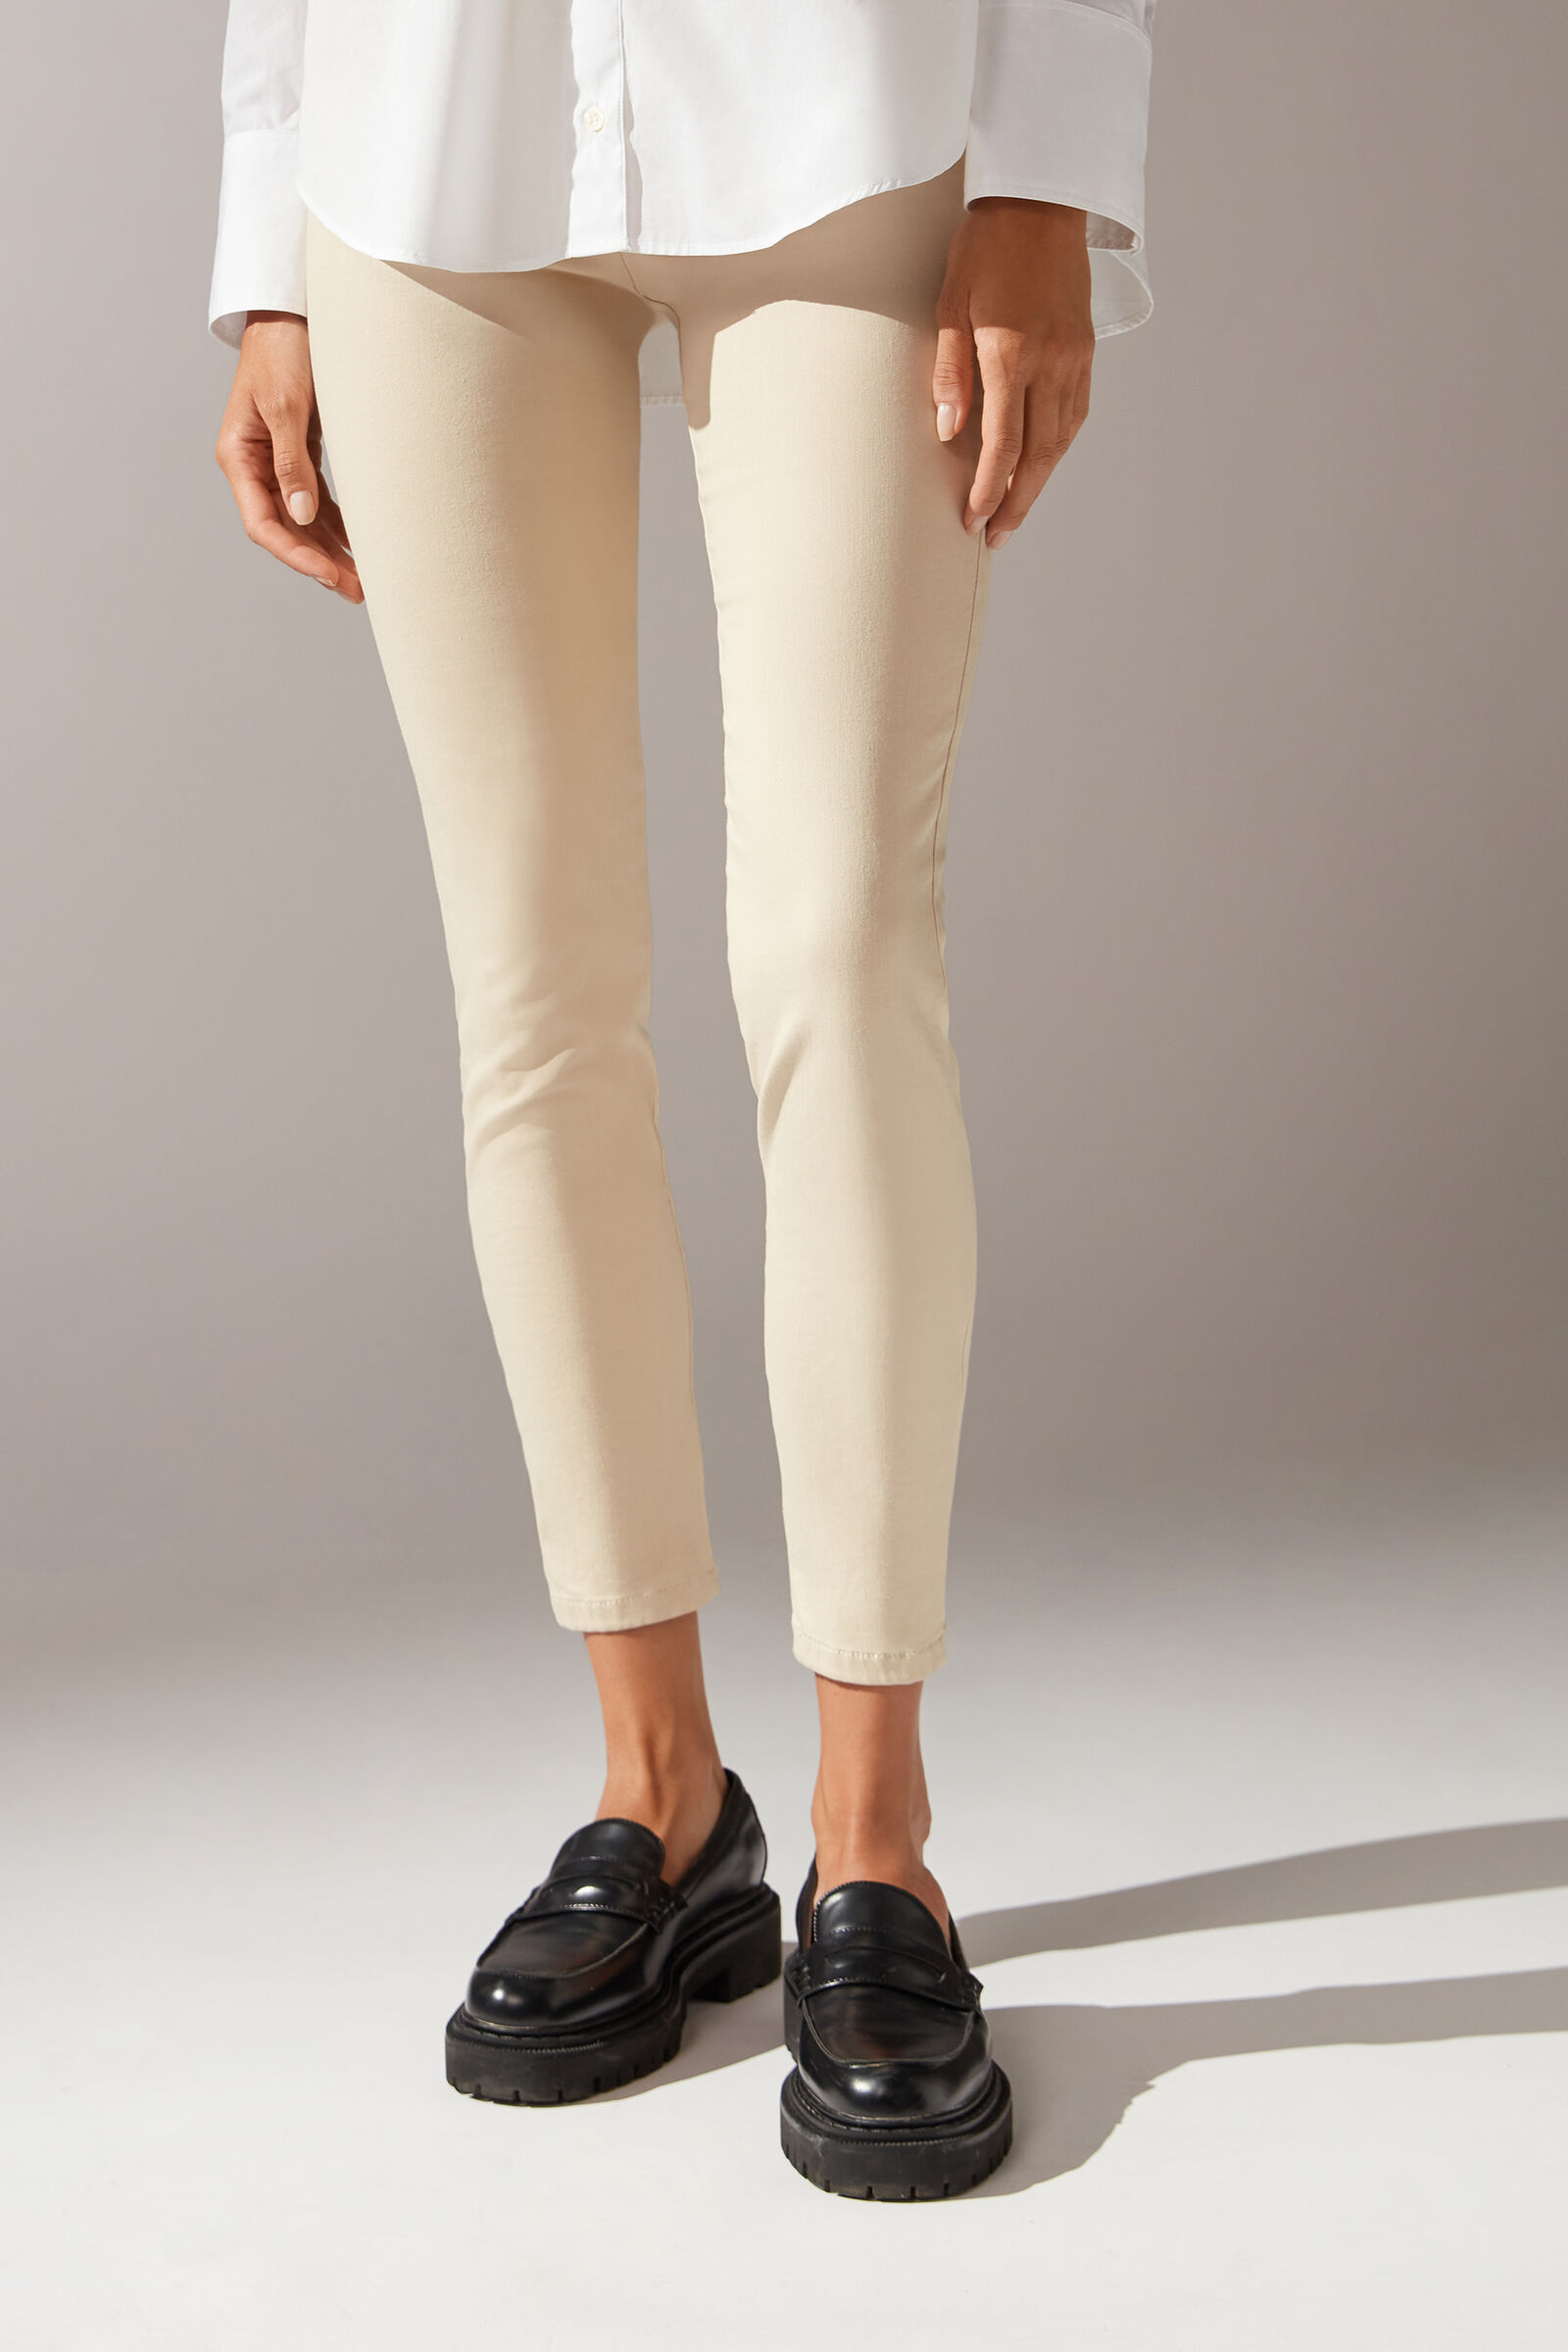 Legging Jeans Skinny com Cintura Alta - MIP076 - Calzedonia